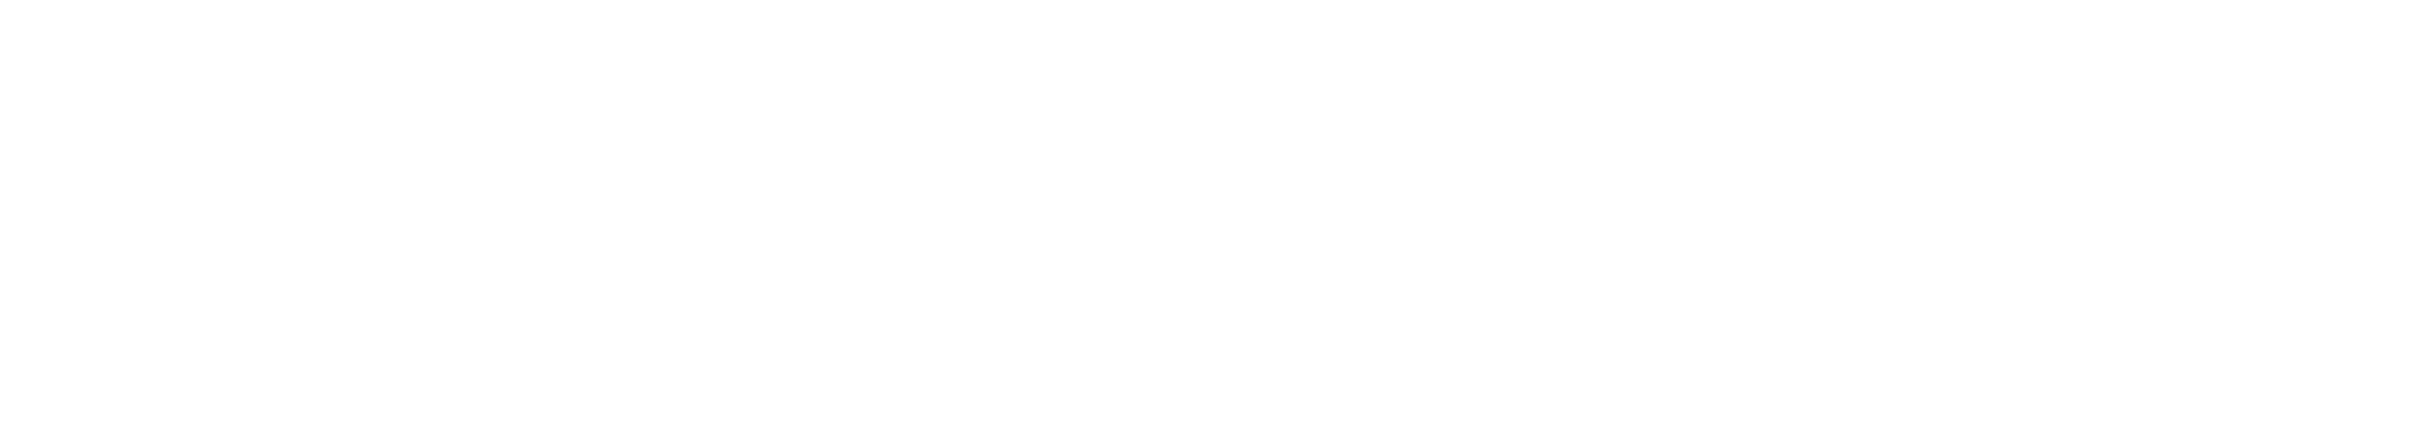 CII Logo - Cll-Tata Communications Centre for Digital Transformation (CDT)